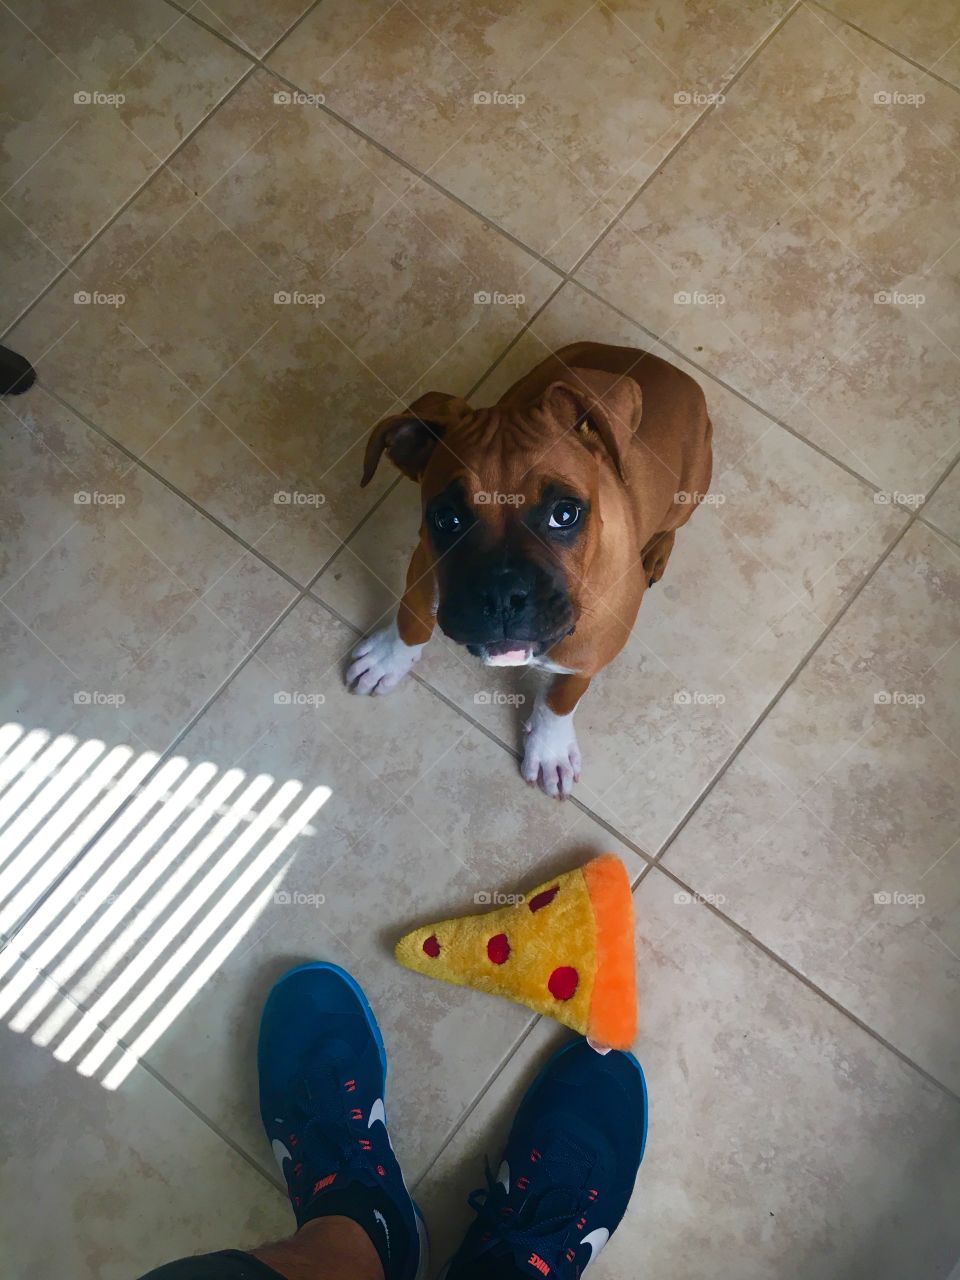 Puppy dog eyes & a slice of pizza. 